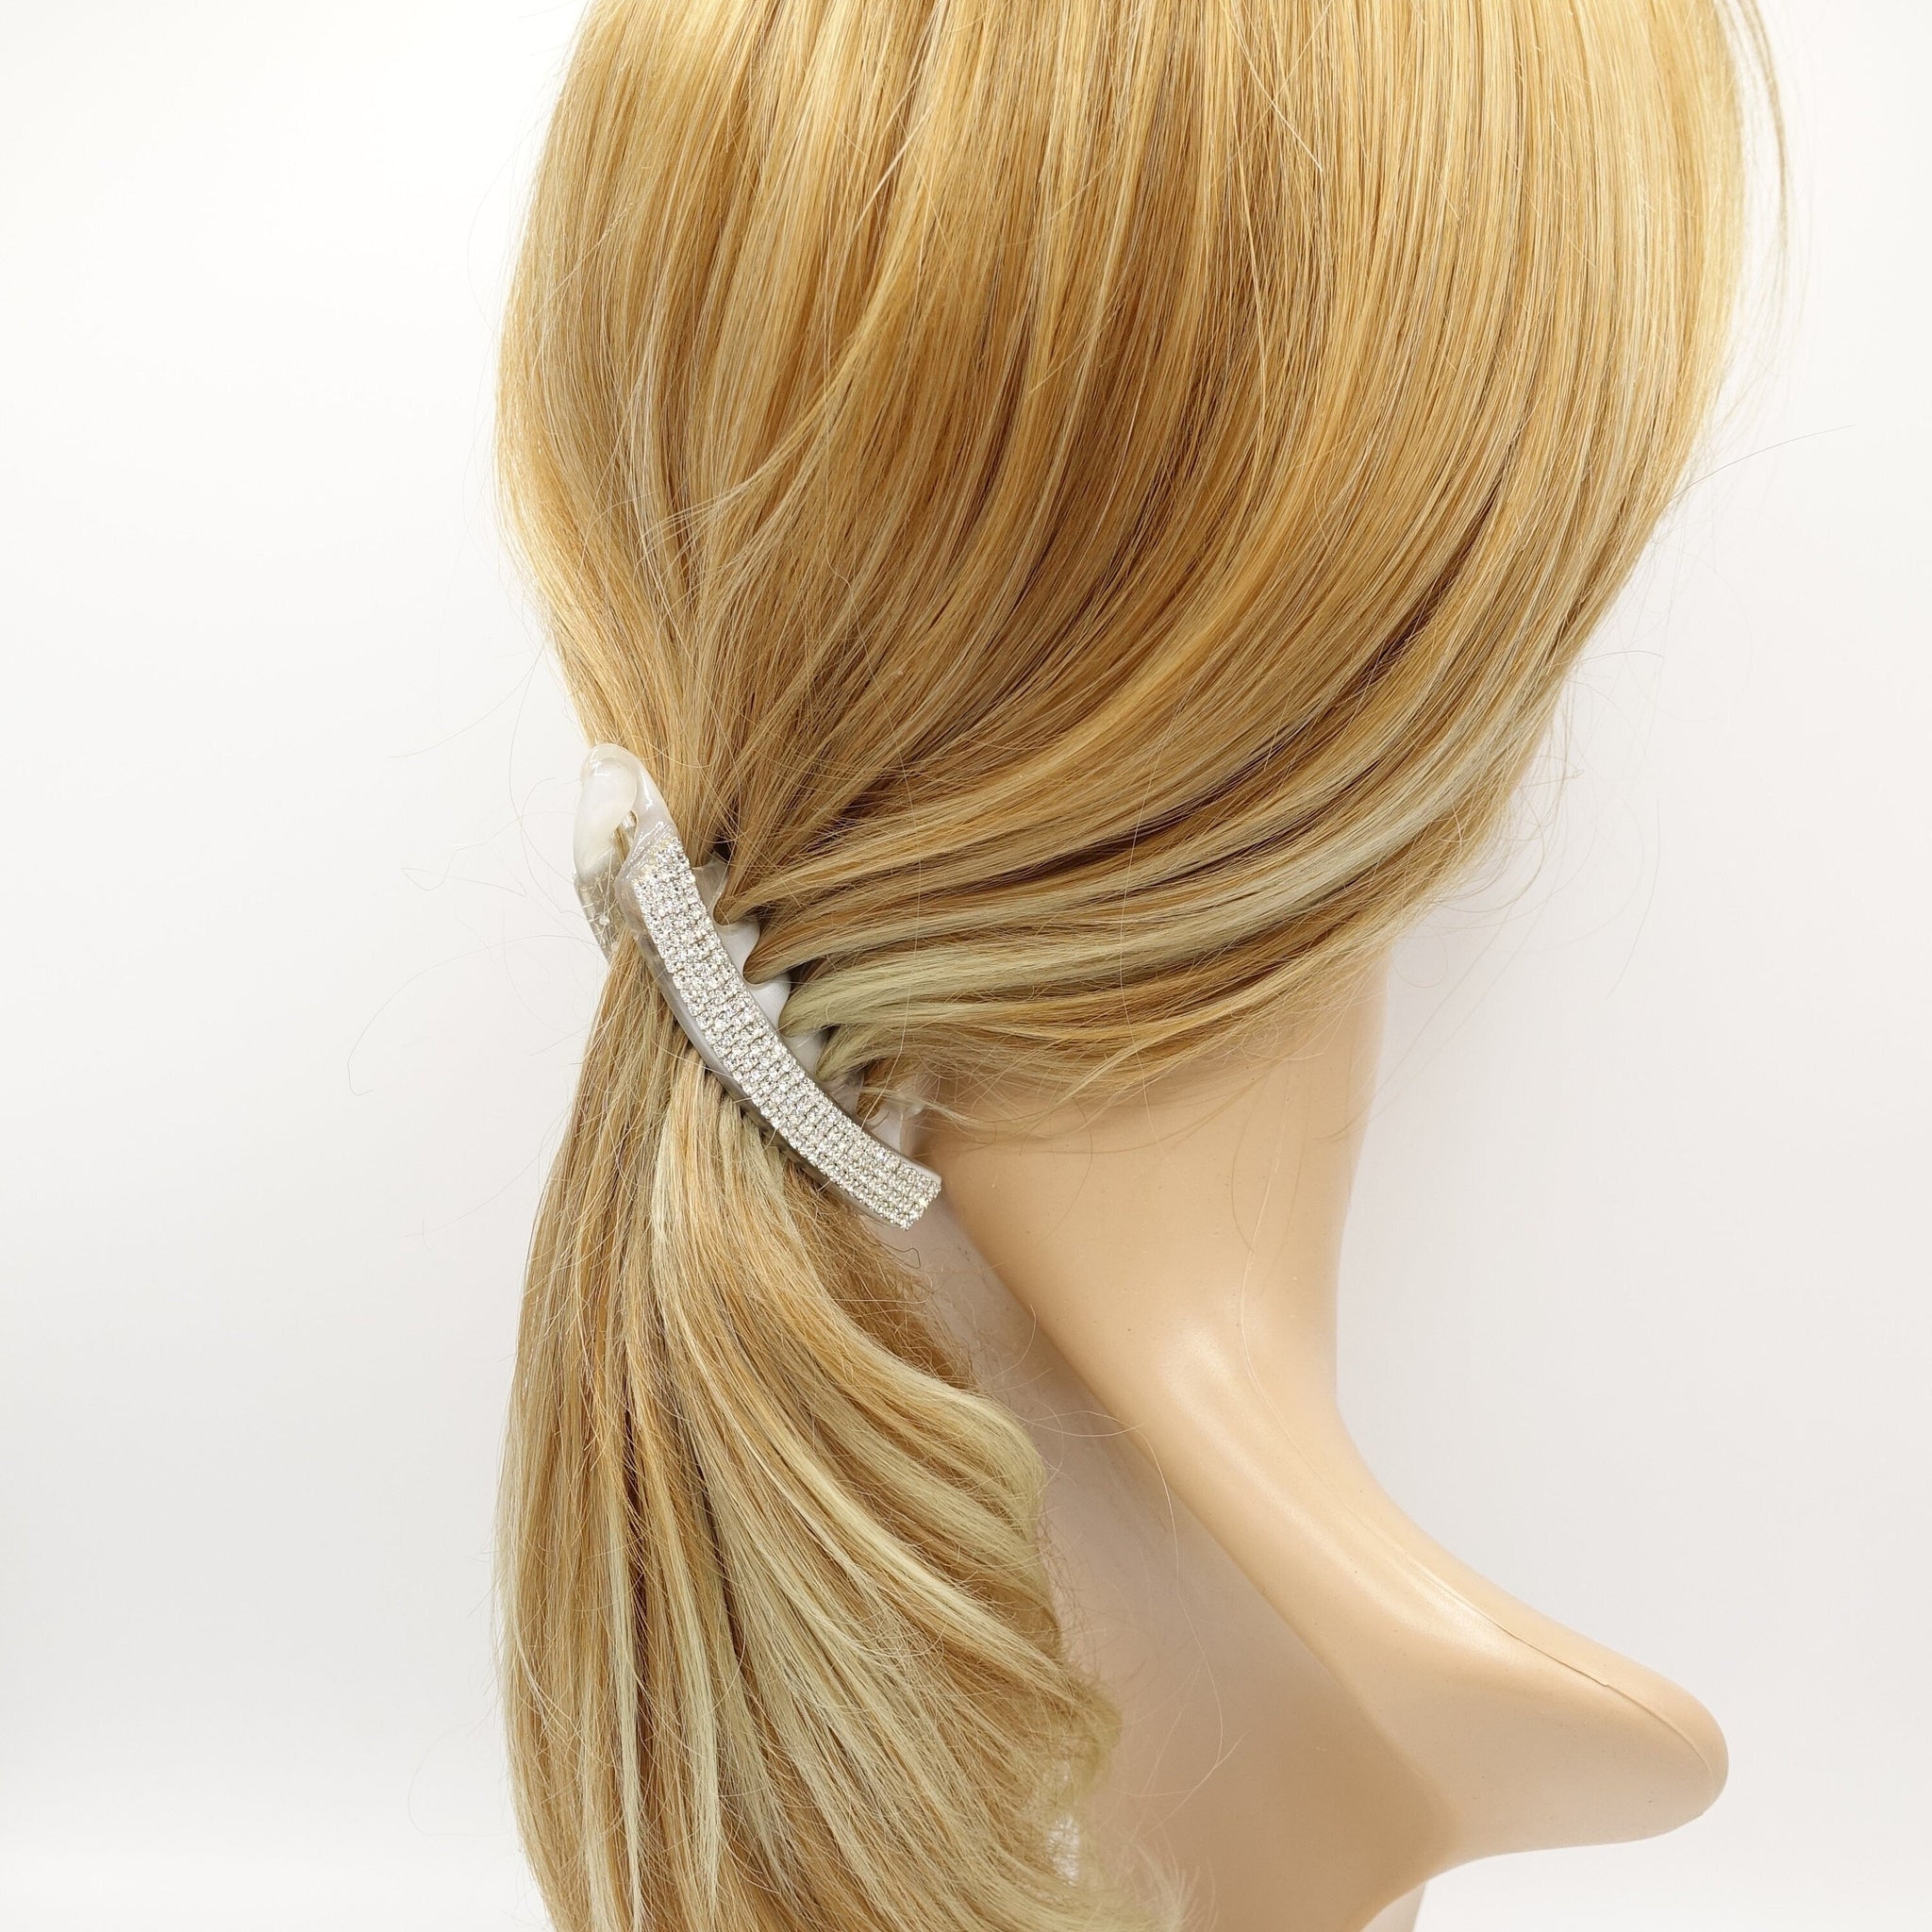 VeryShine claw/banana/barrette rhinestone embellished banana hair clip hair accessory for women